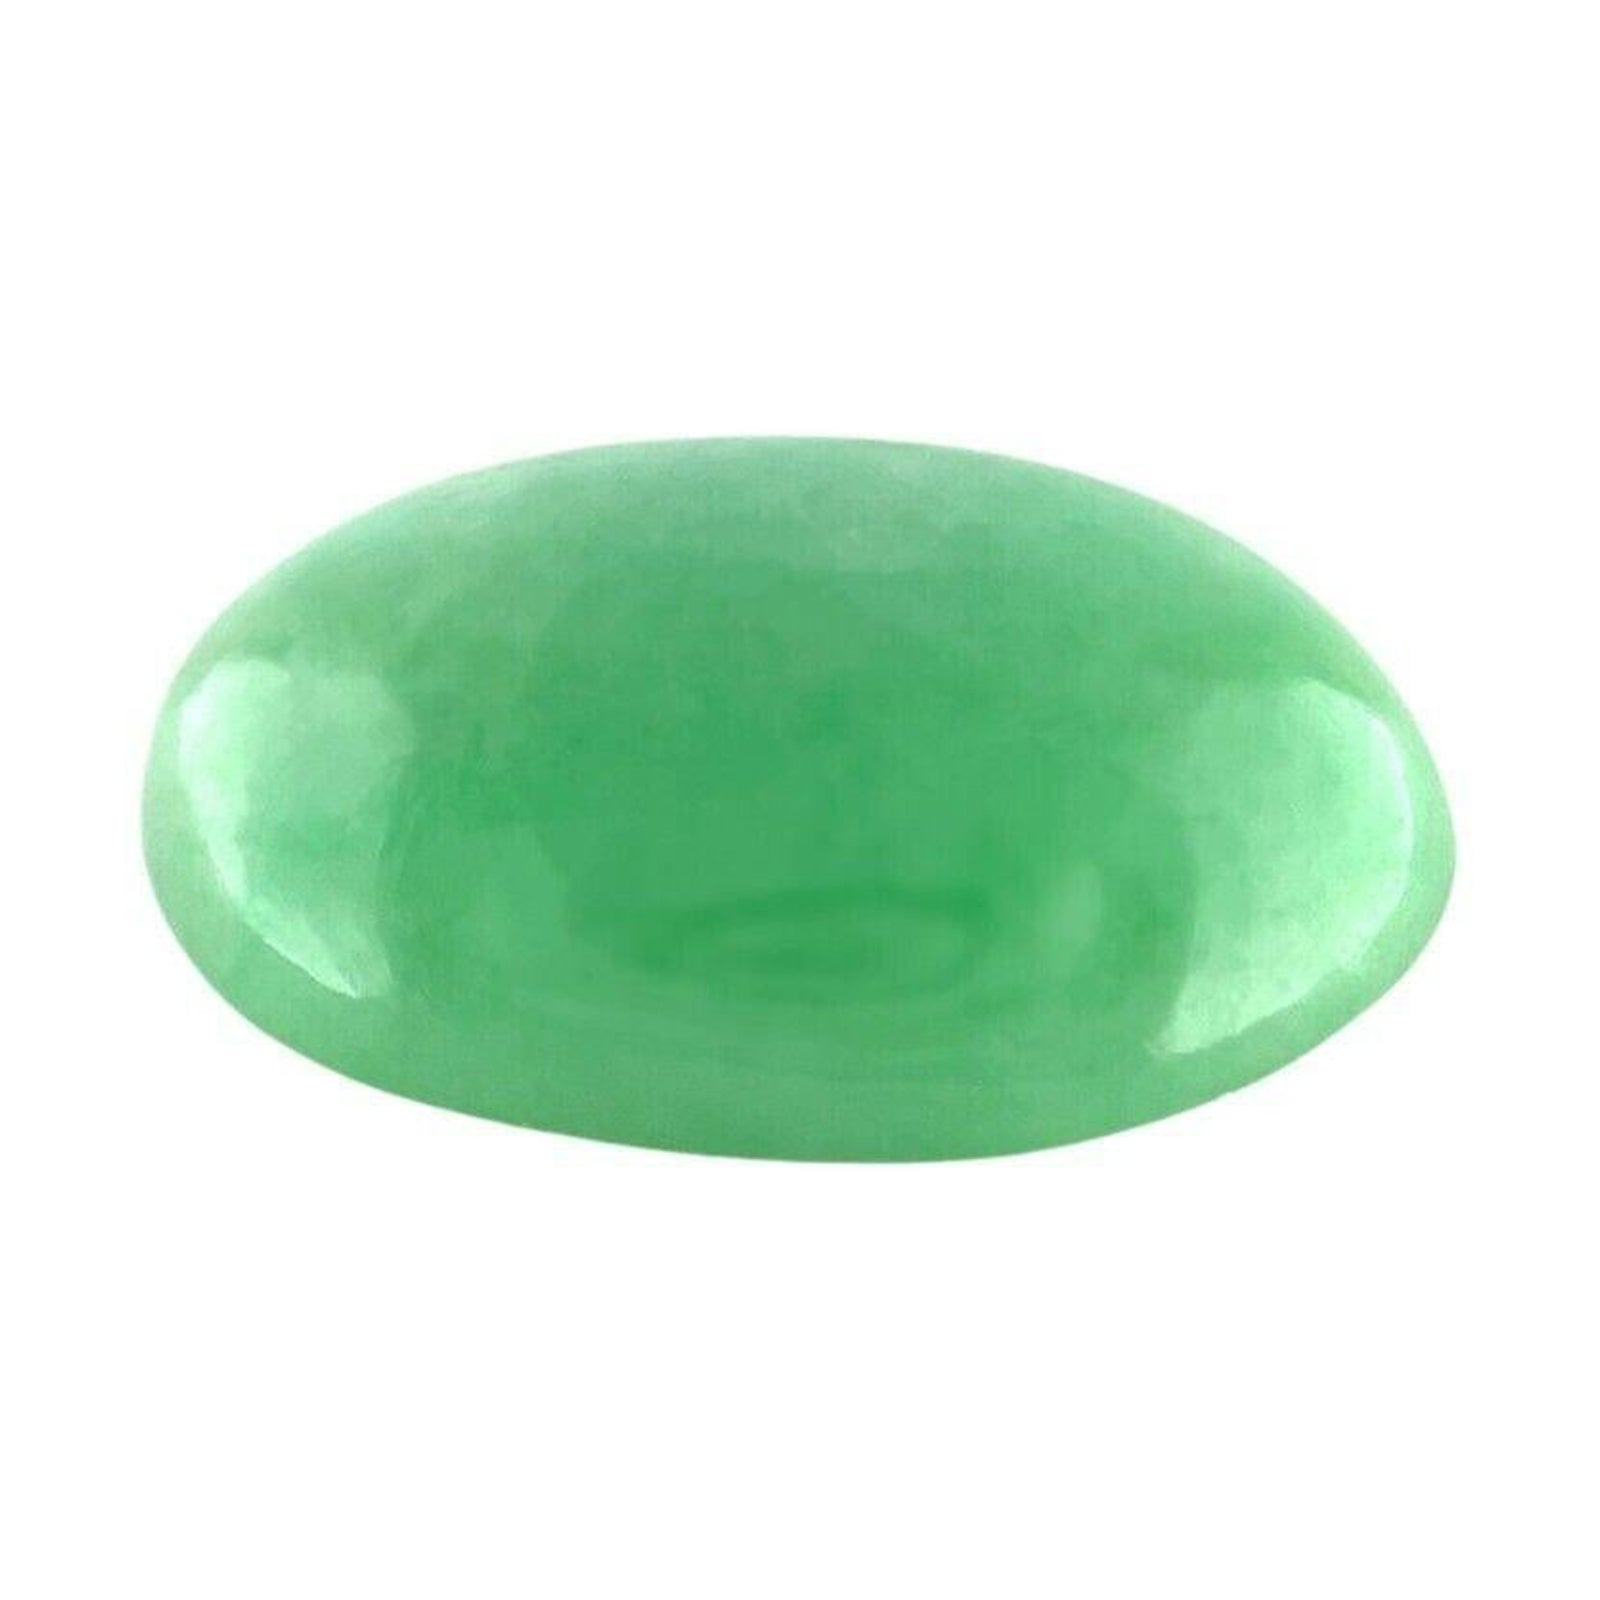 Rare 4.21ct IGI Certified Green Jadeite Jade ‘A’ Grade Oval Cabochon Loose Gem For Sale